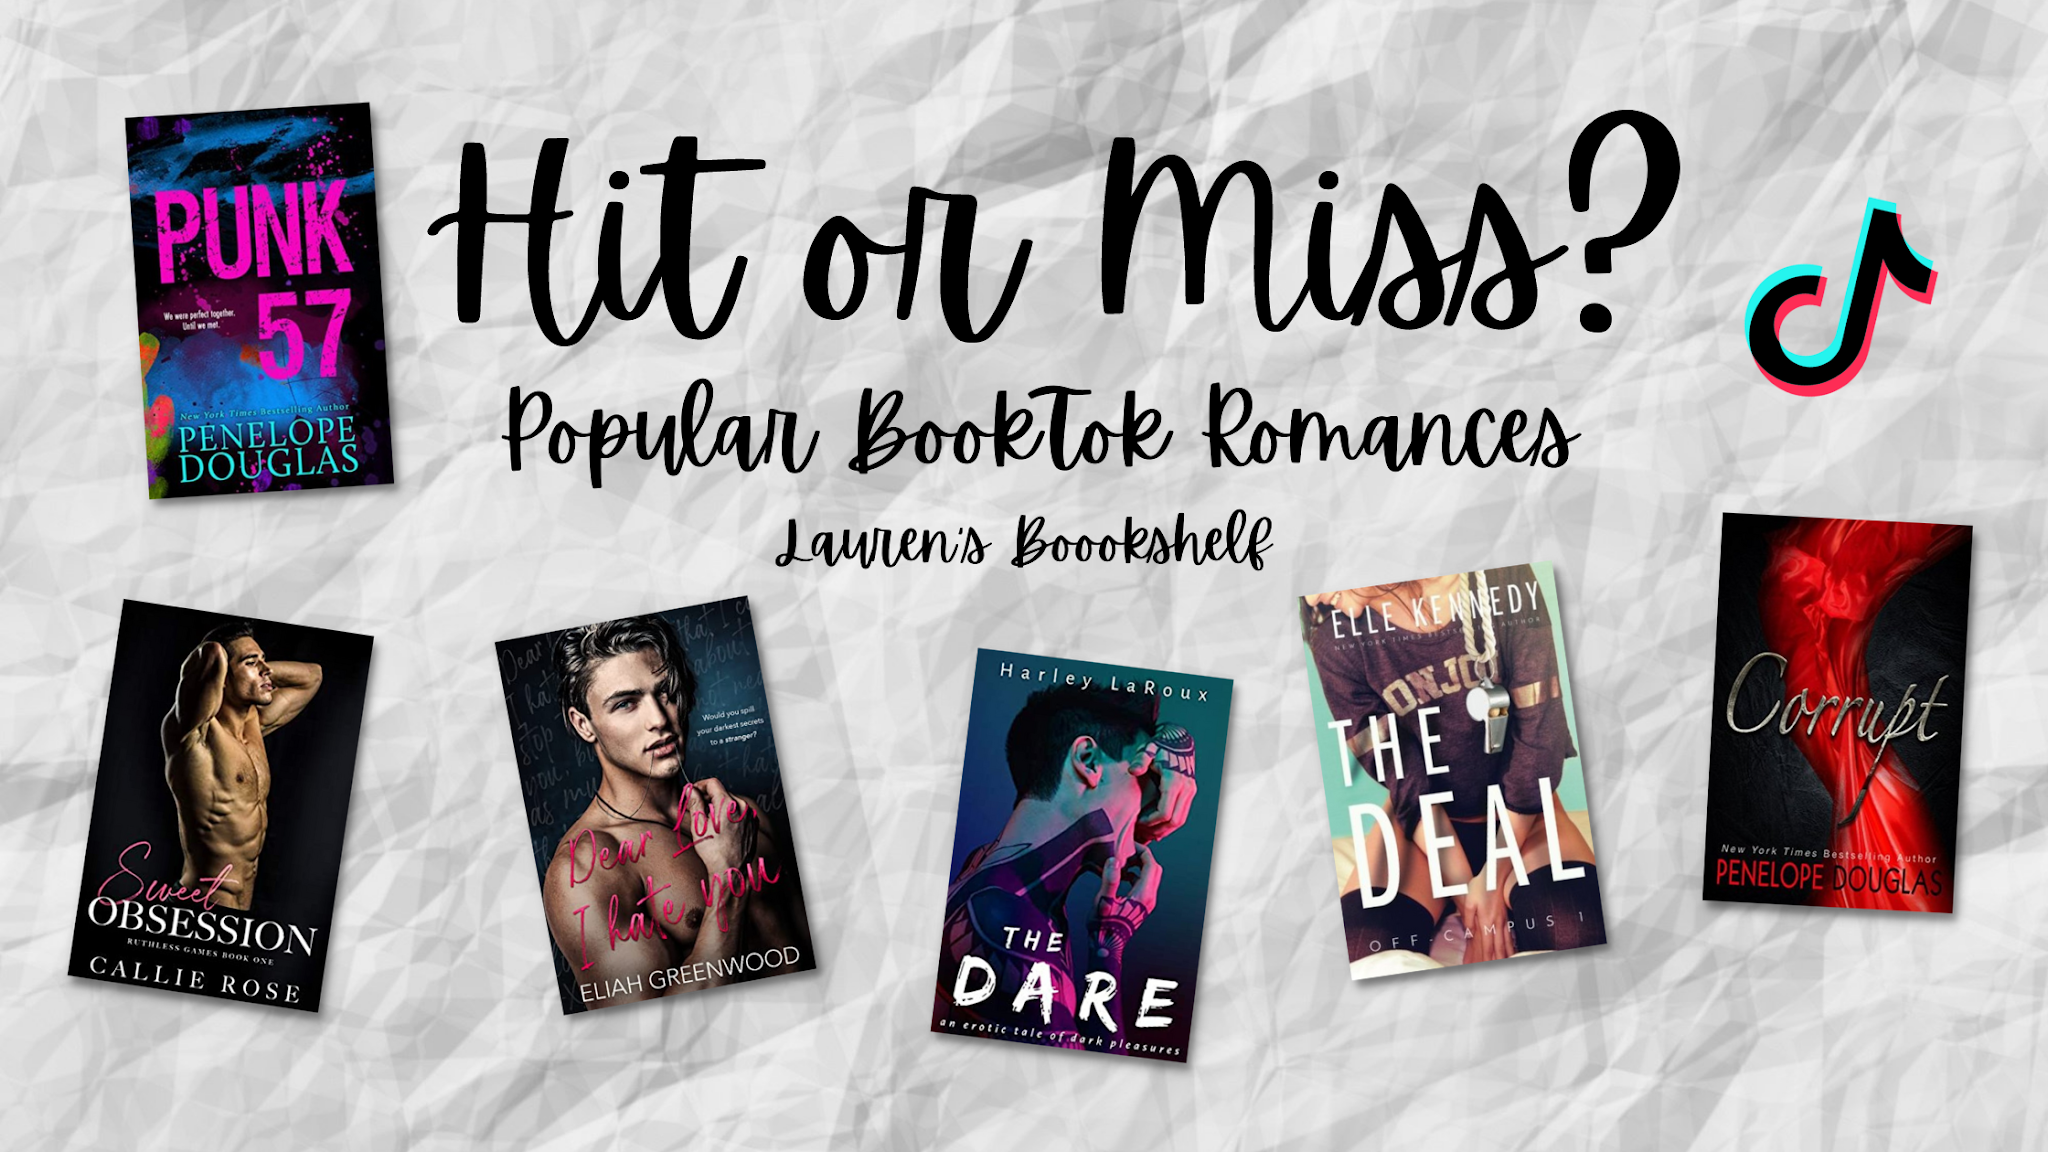 Lauren's Boookshelf: Hit or Miss? Popular BookTok Romances